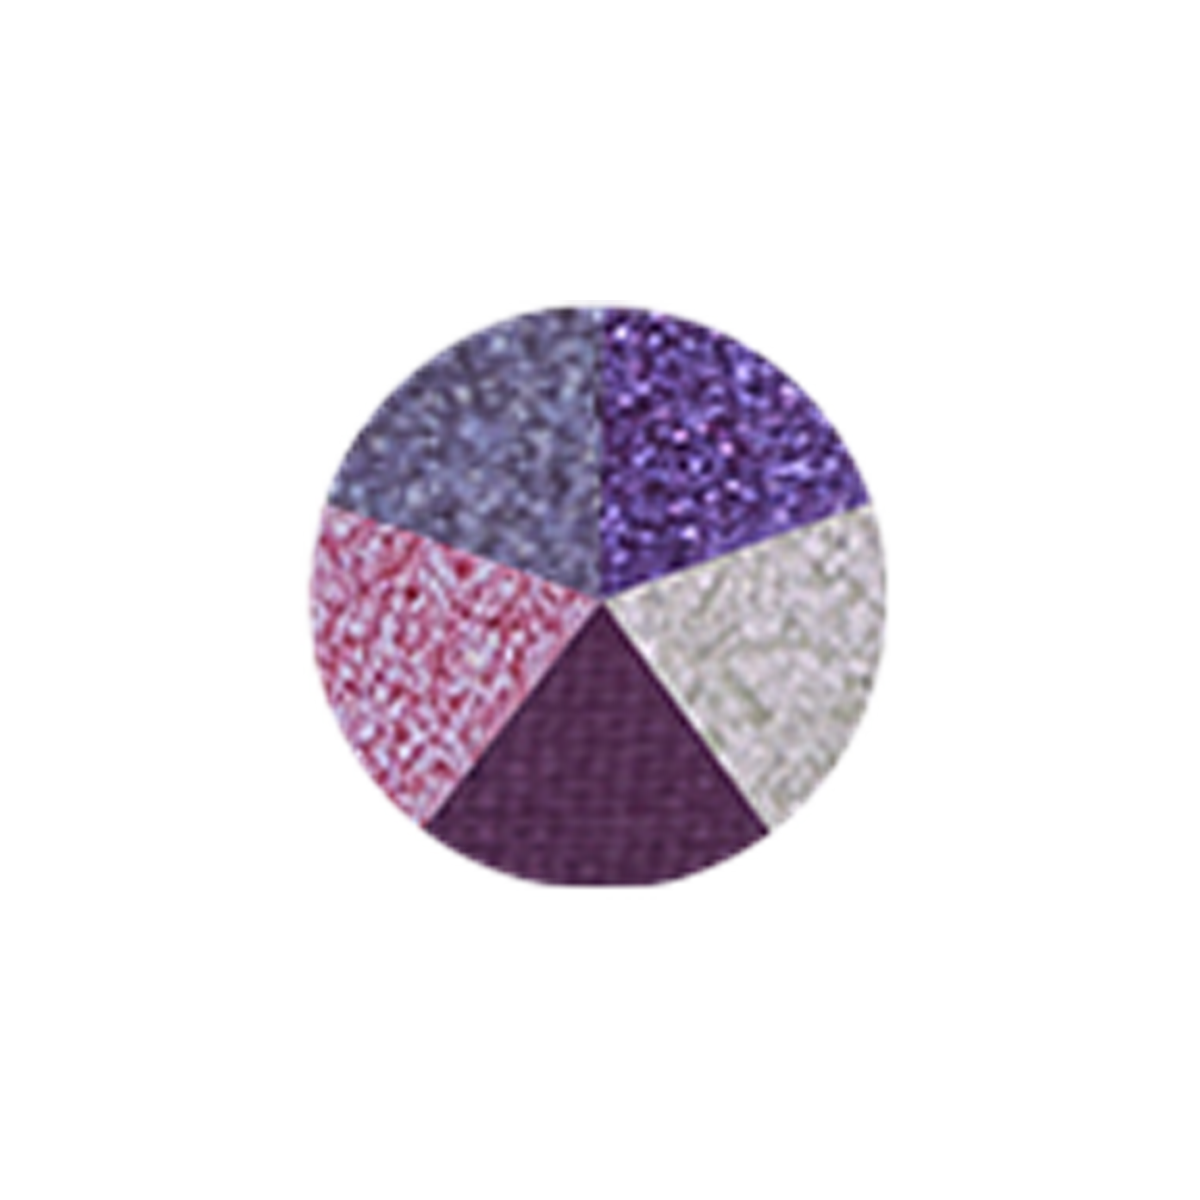 Byredo - Eyeshadow 5 Colours Purple Echo